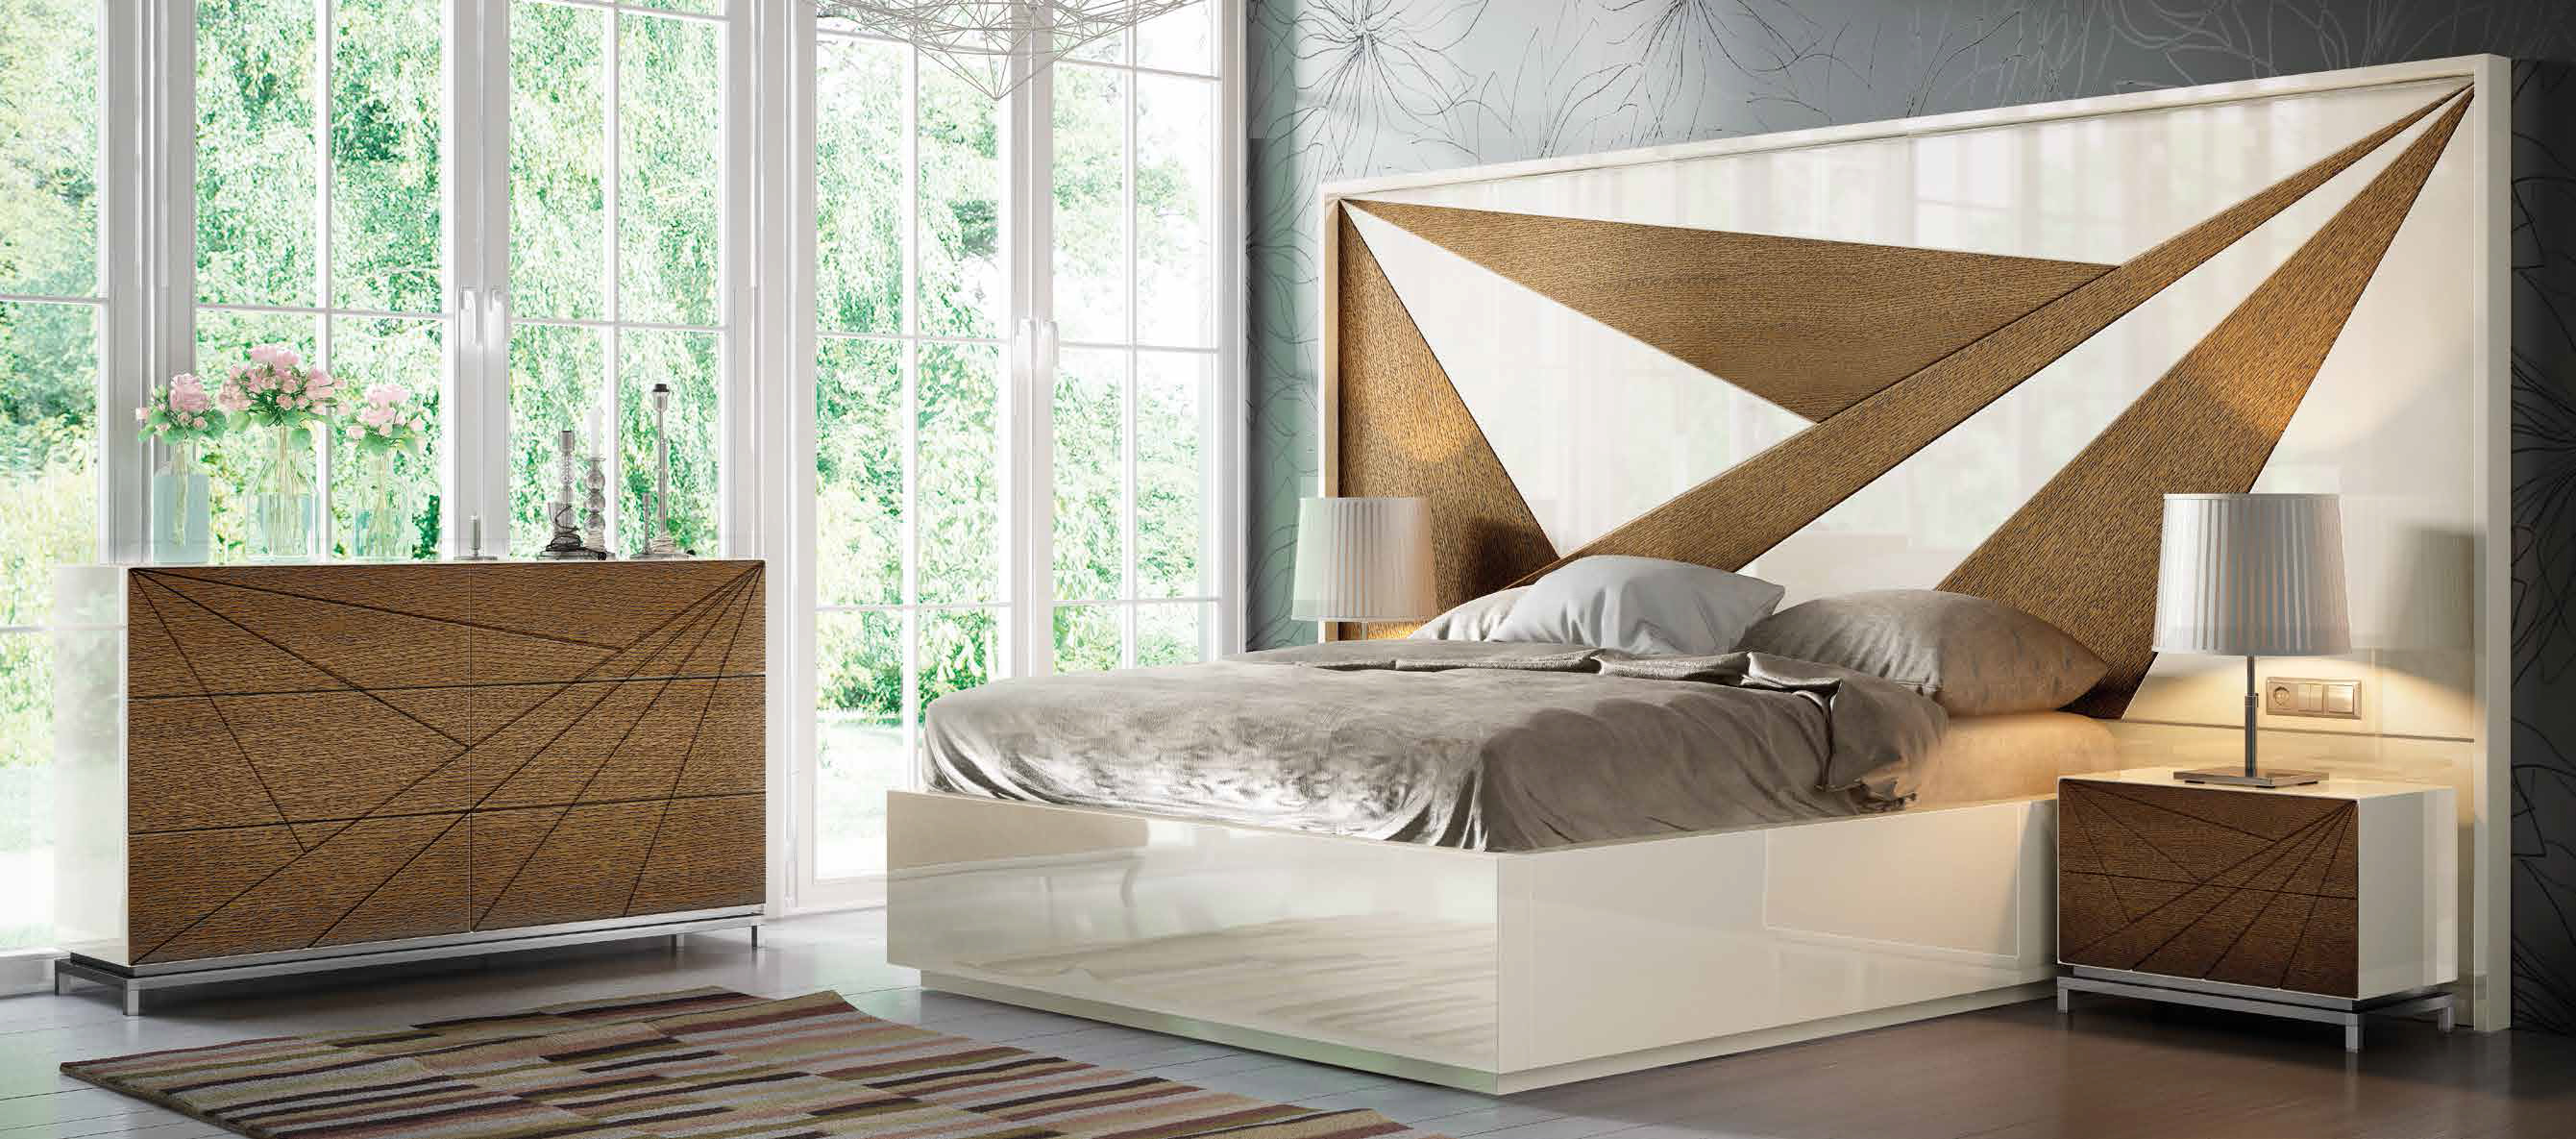 Brands Franco Furniture Bedrooms vol2, Spain DOR 19